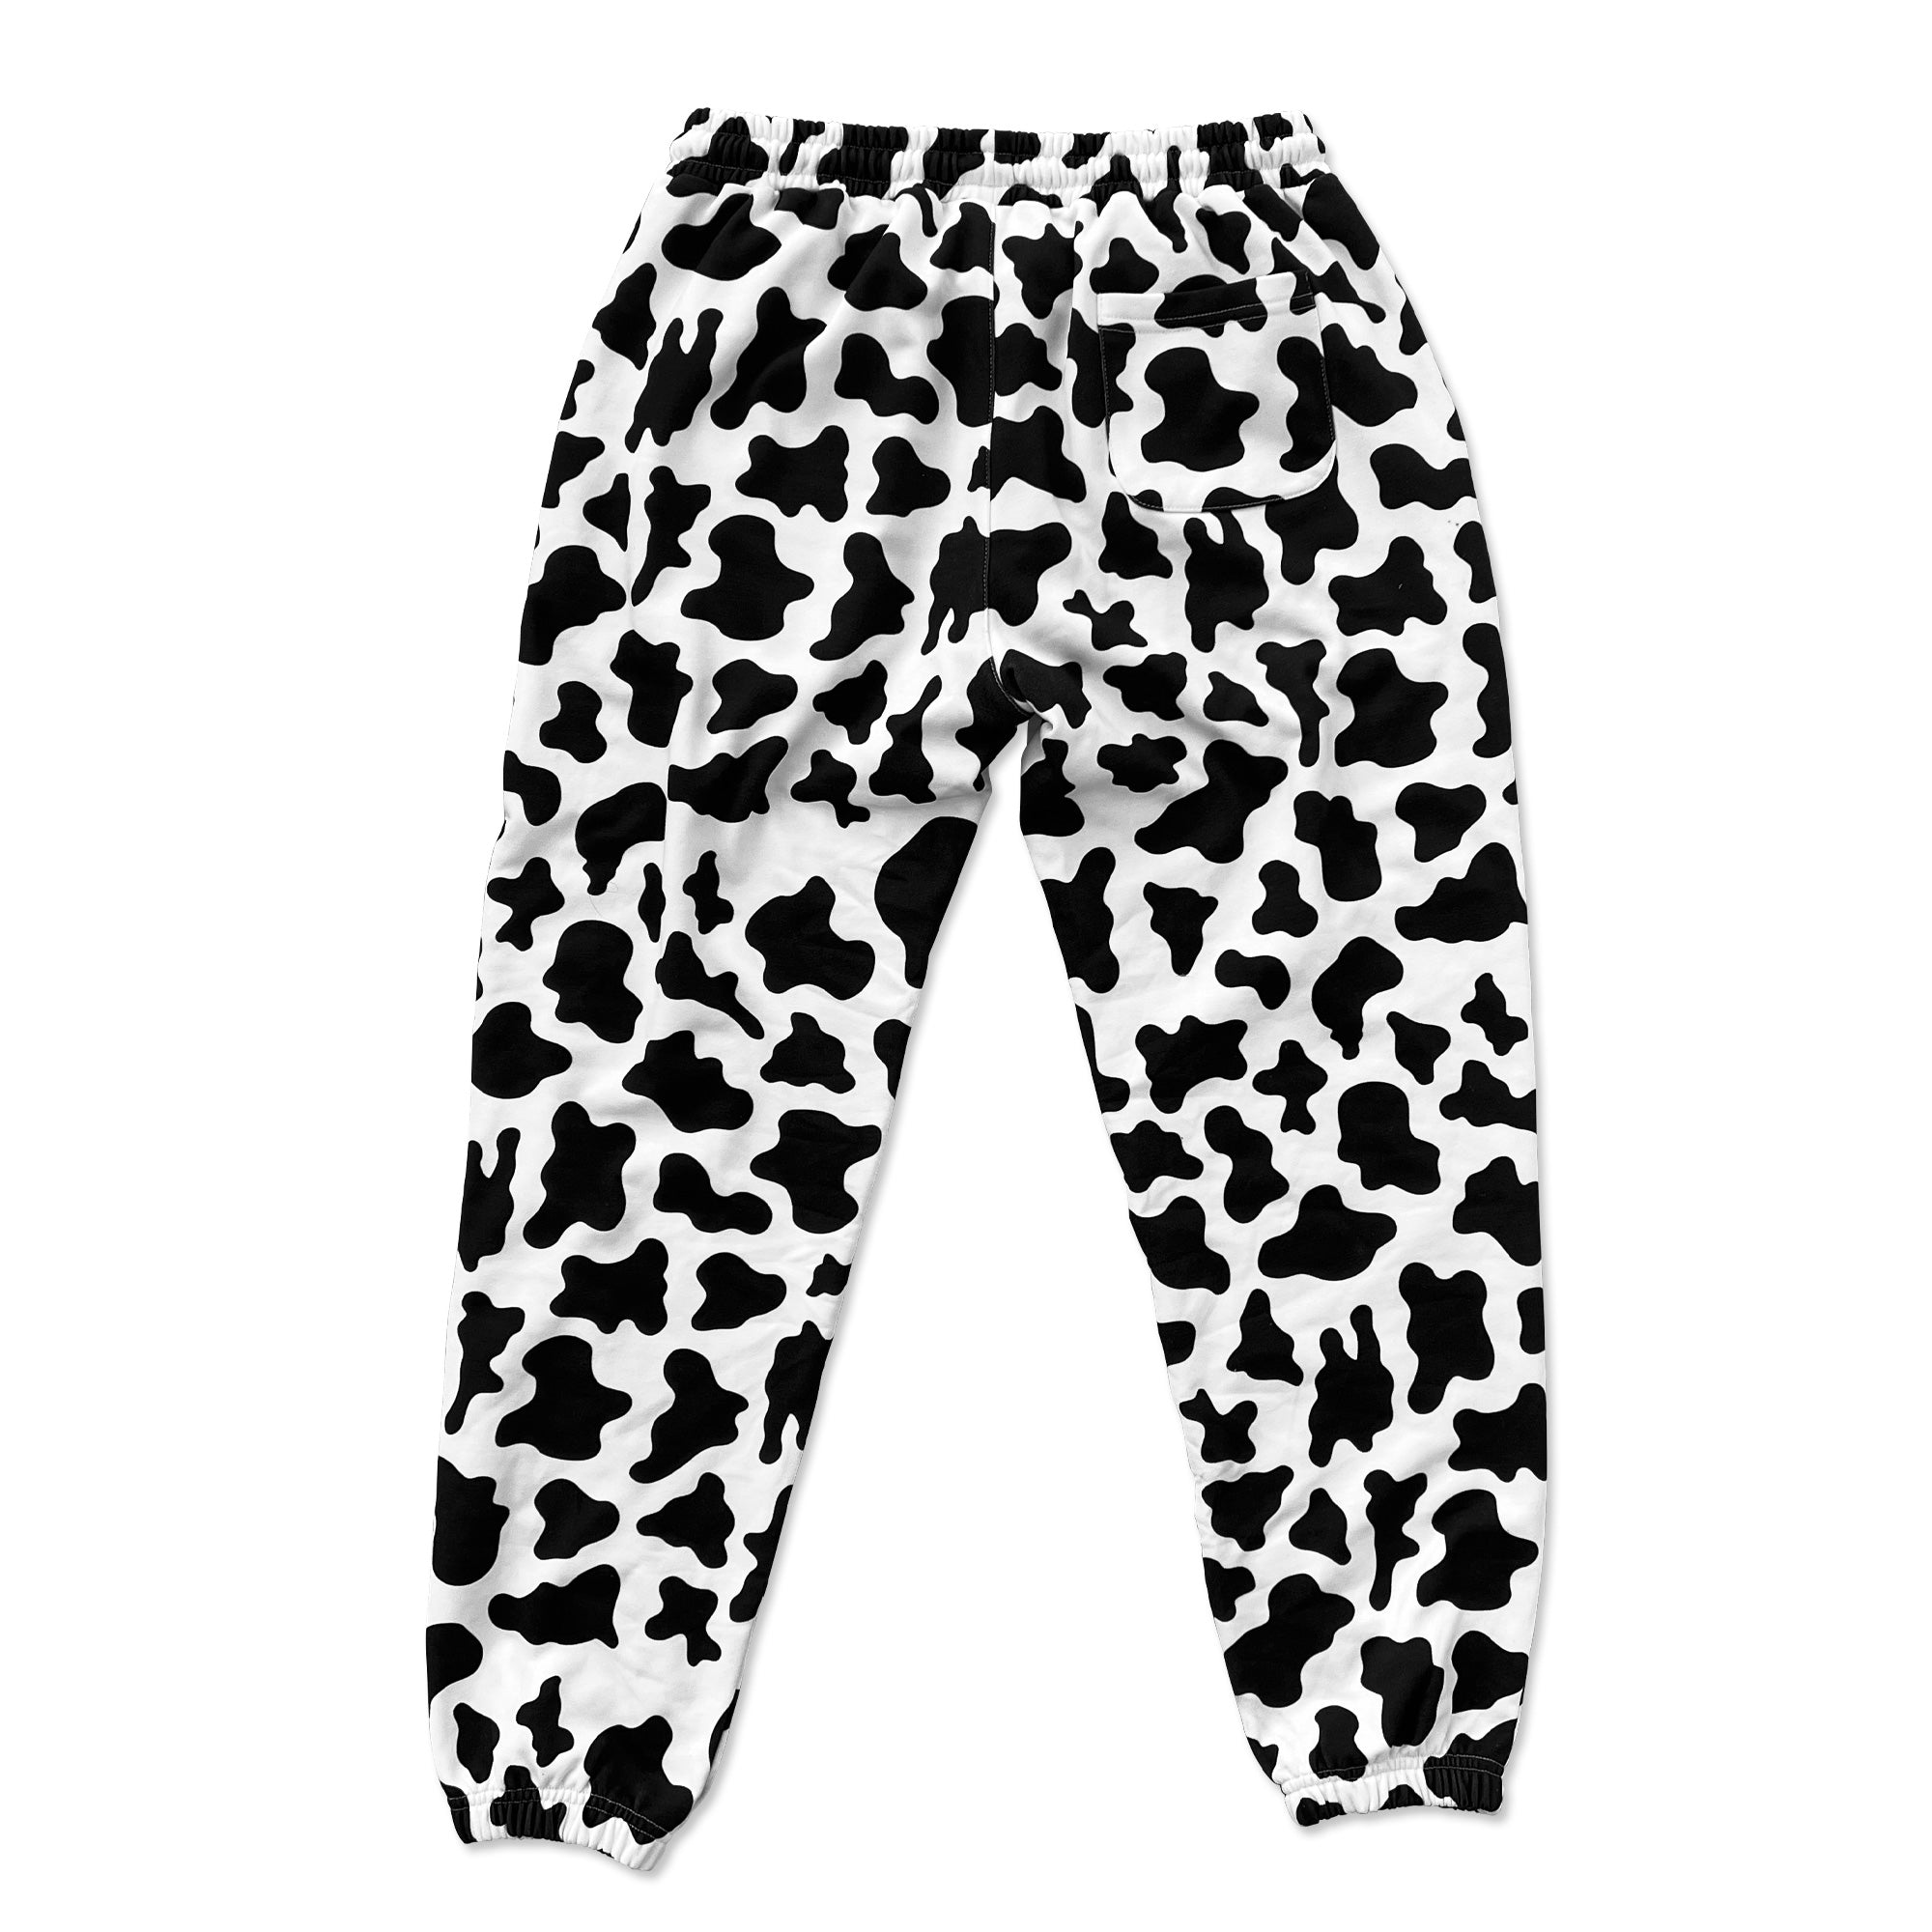 Terry Tech Sweatpants - Cow Print (Preorder) – Flexliving